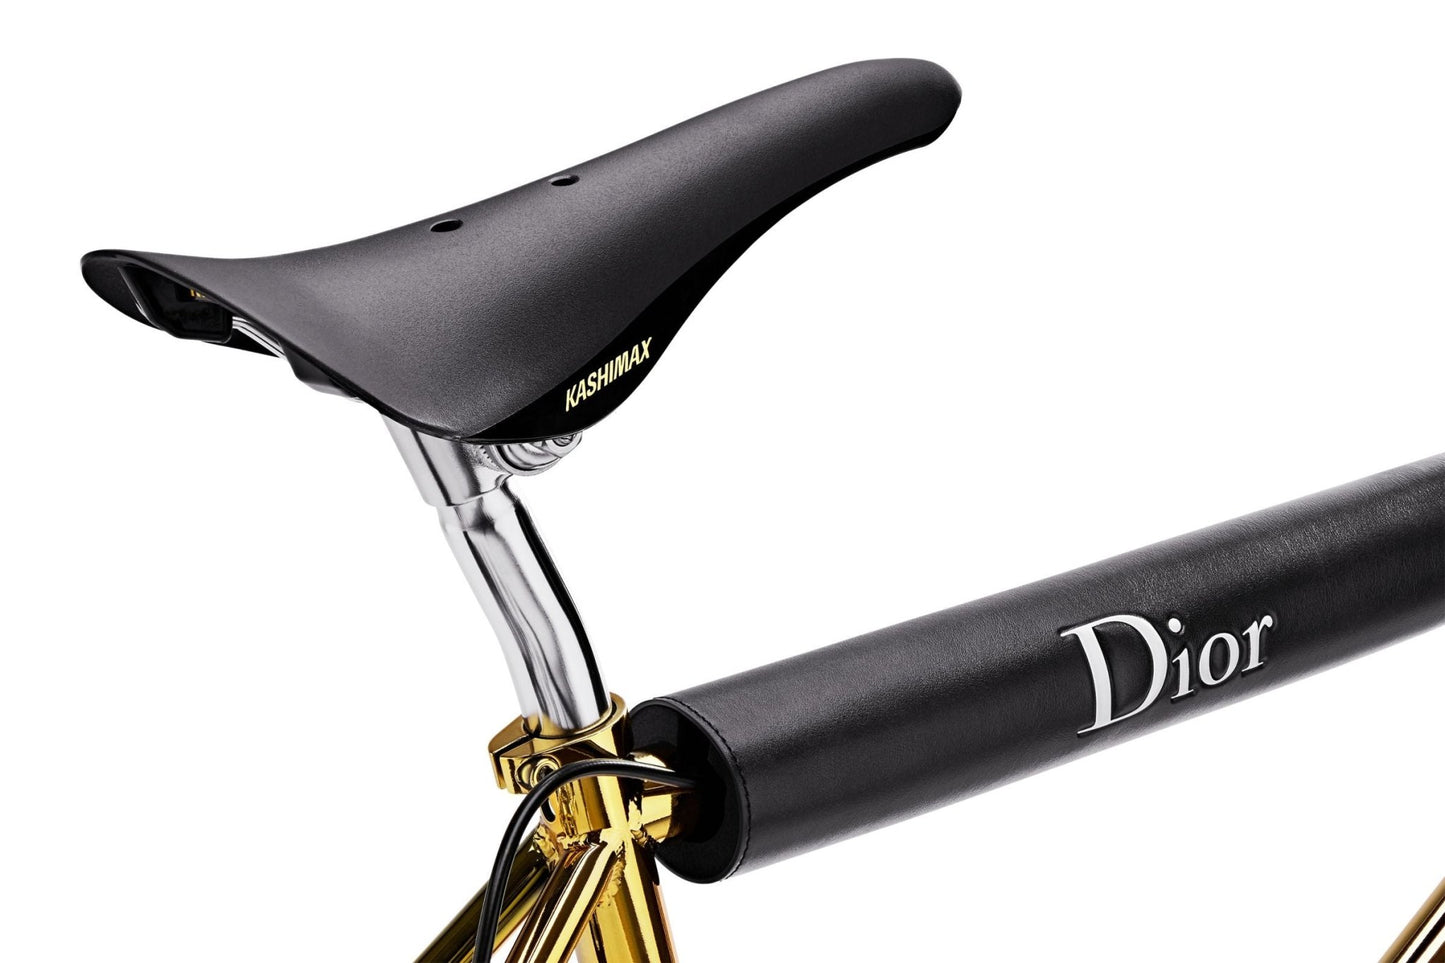 Bogarde X Dior Golden BMX - TheArsenale